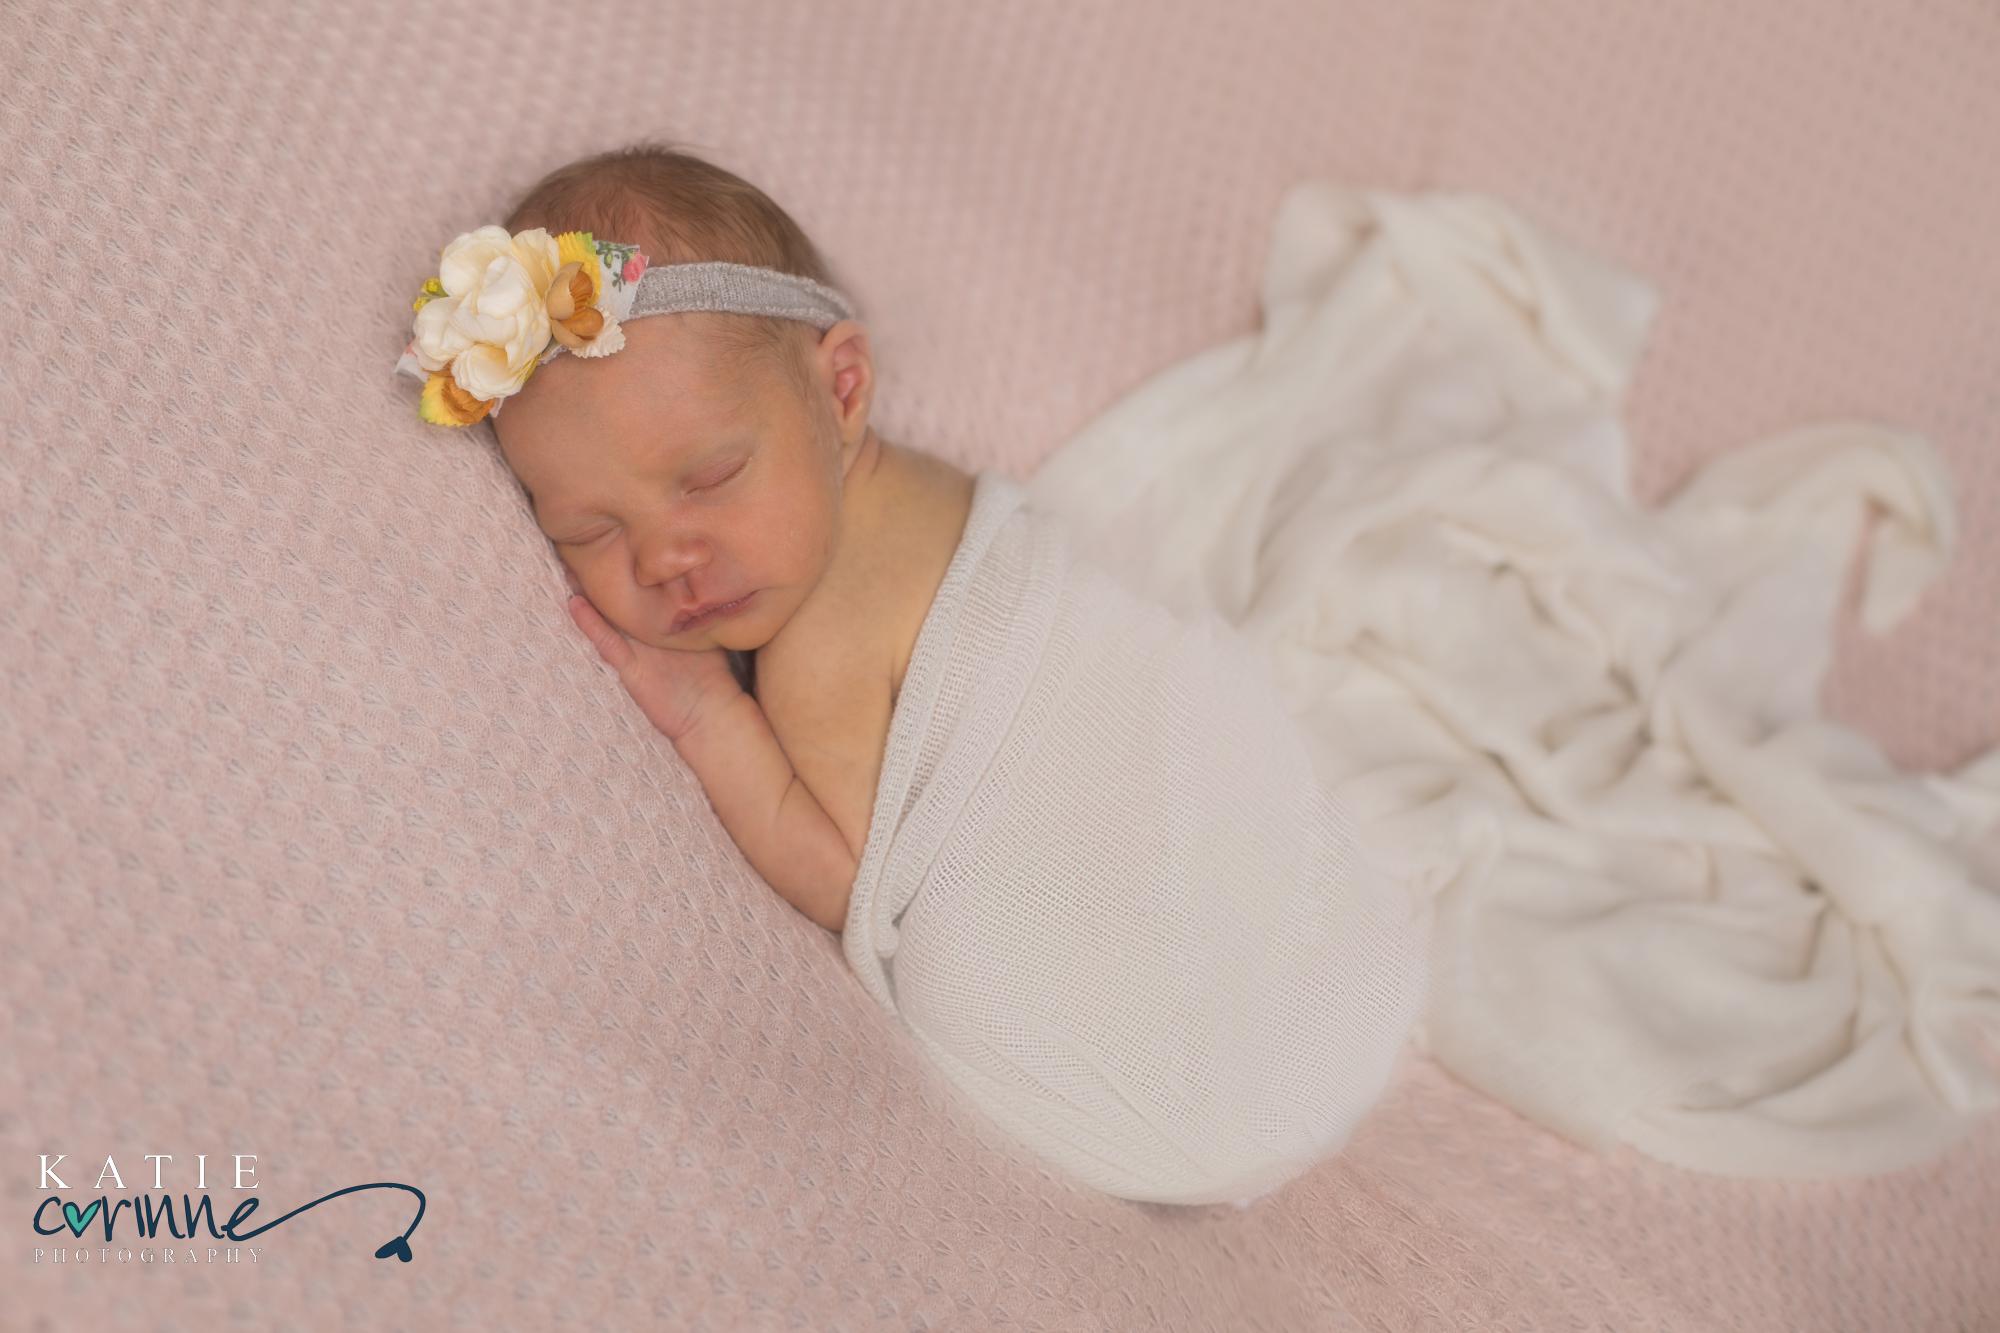 Newborn photographer take portraits of sweet baby girl